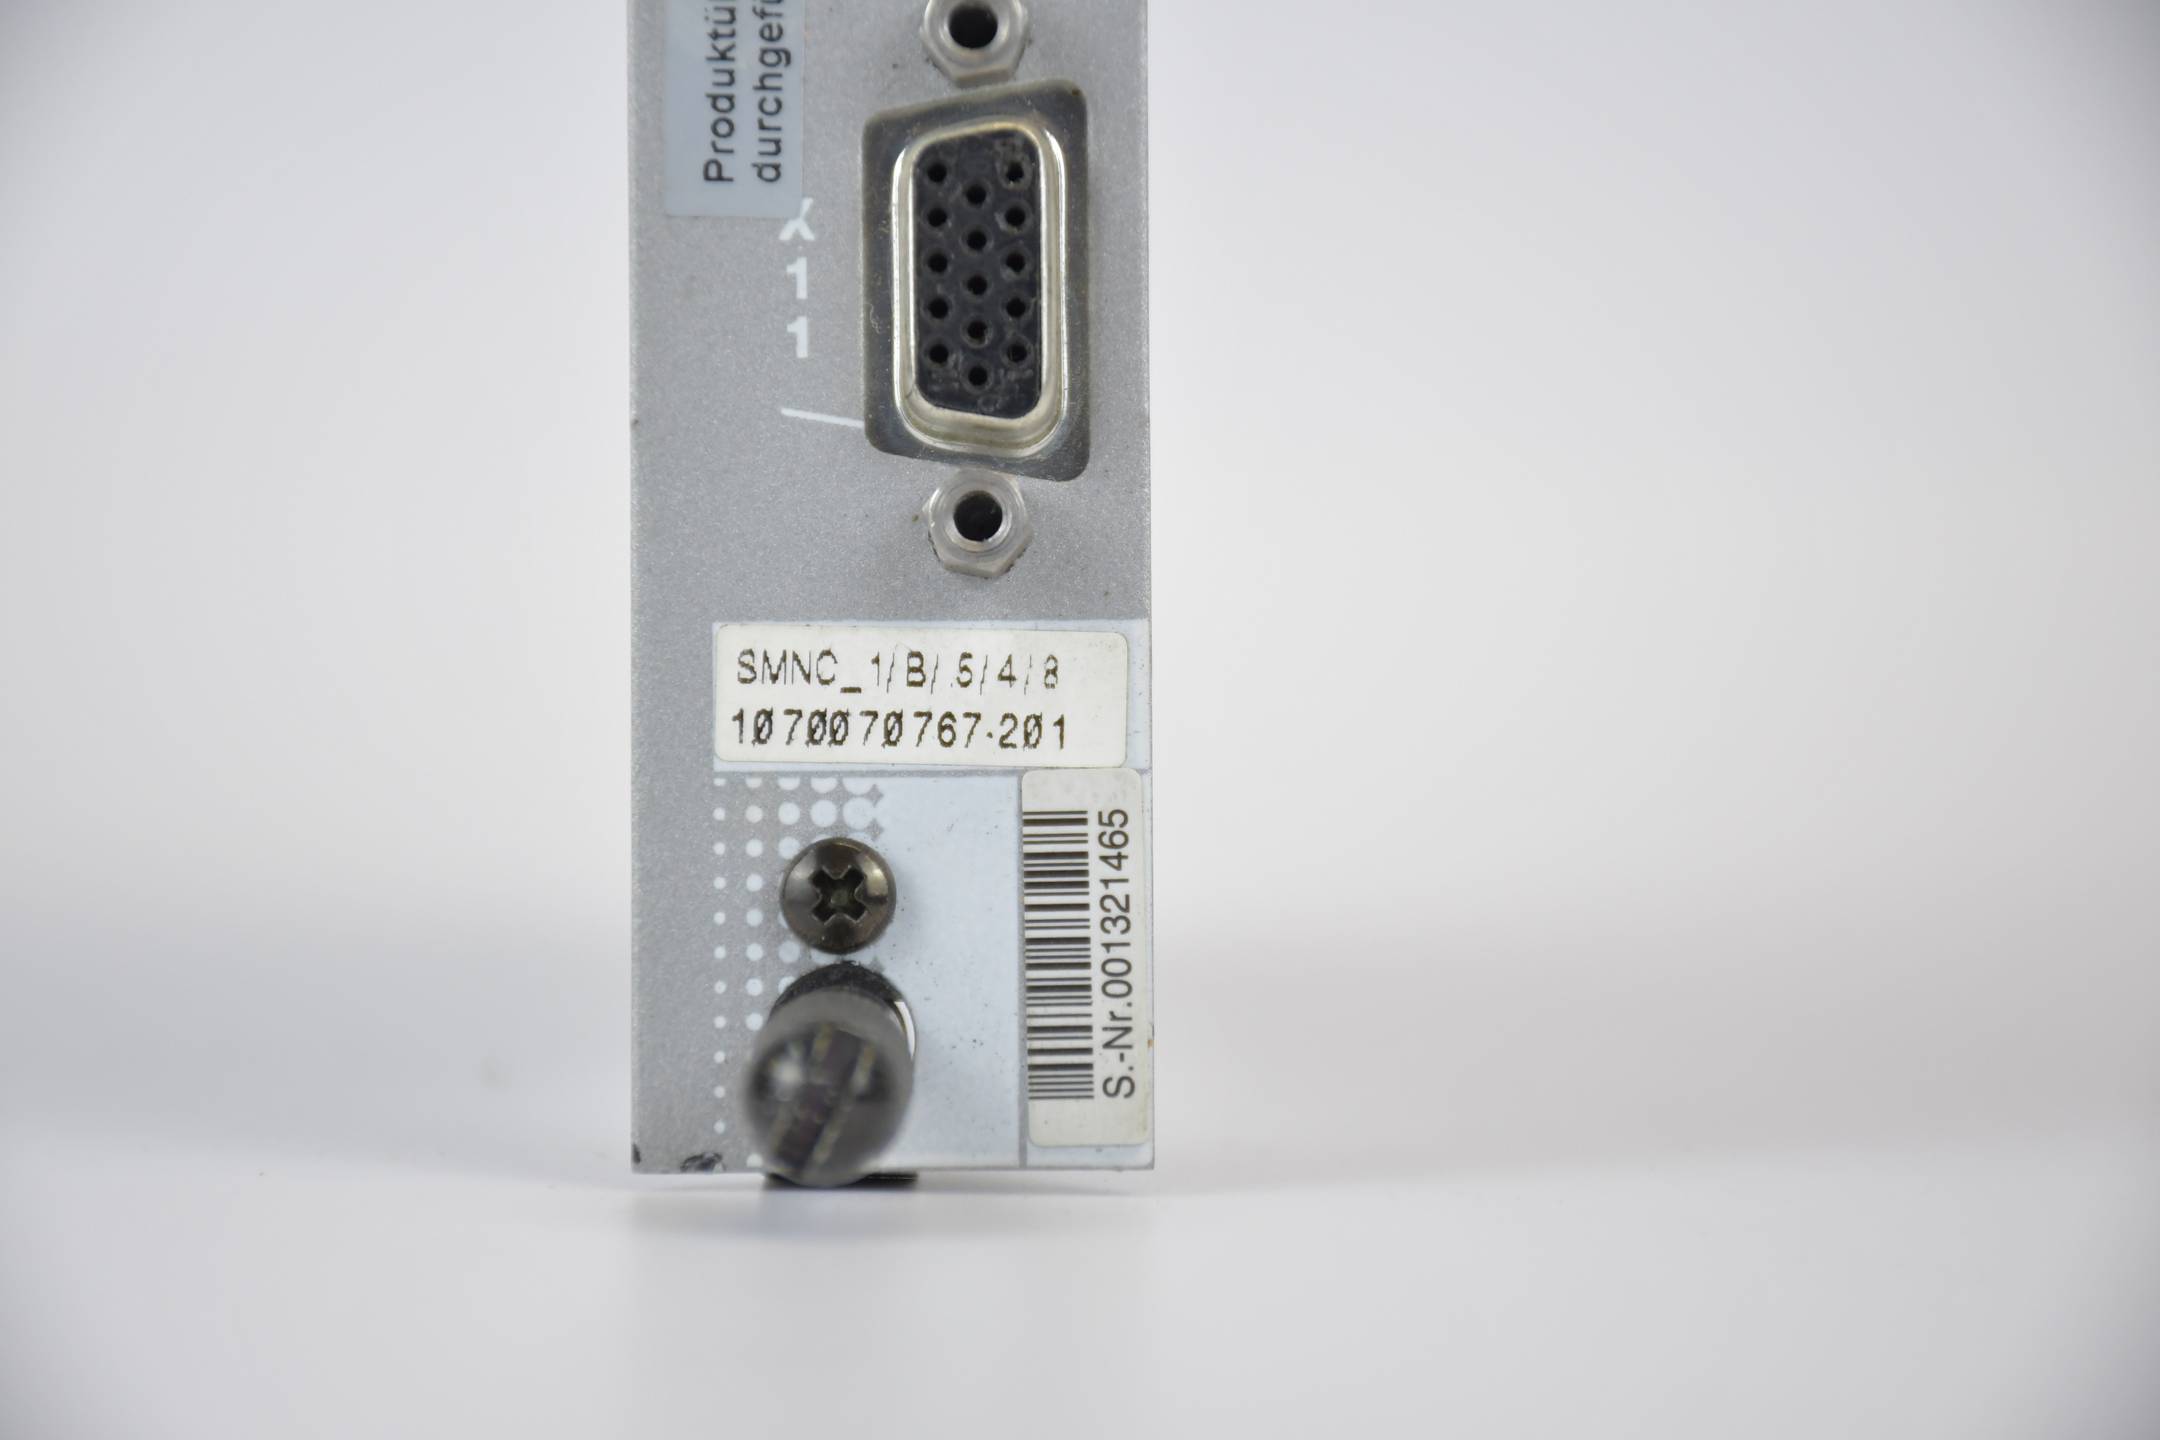 Bosch SMNC_1/B/.5/4/8 1070070767-201 inkl. 19000195 SC512KB Sram Memory Card